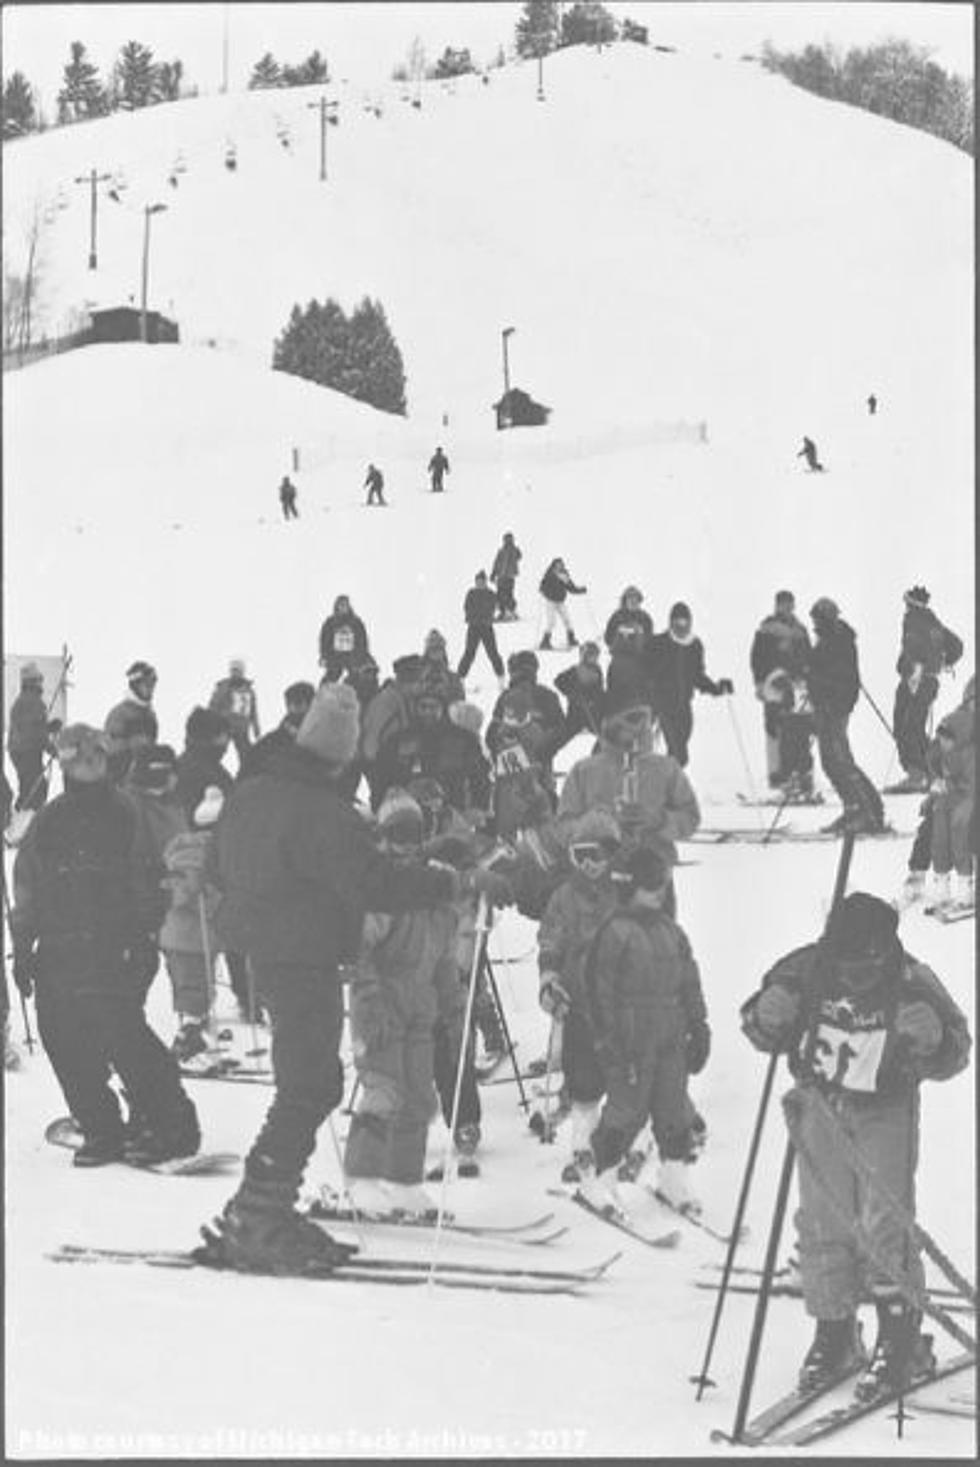 The Oldest Ski Area in Michigan